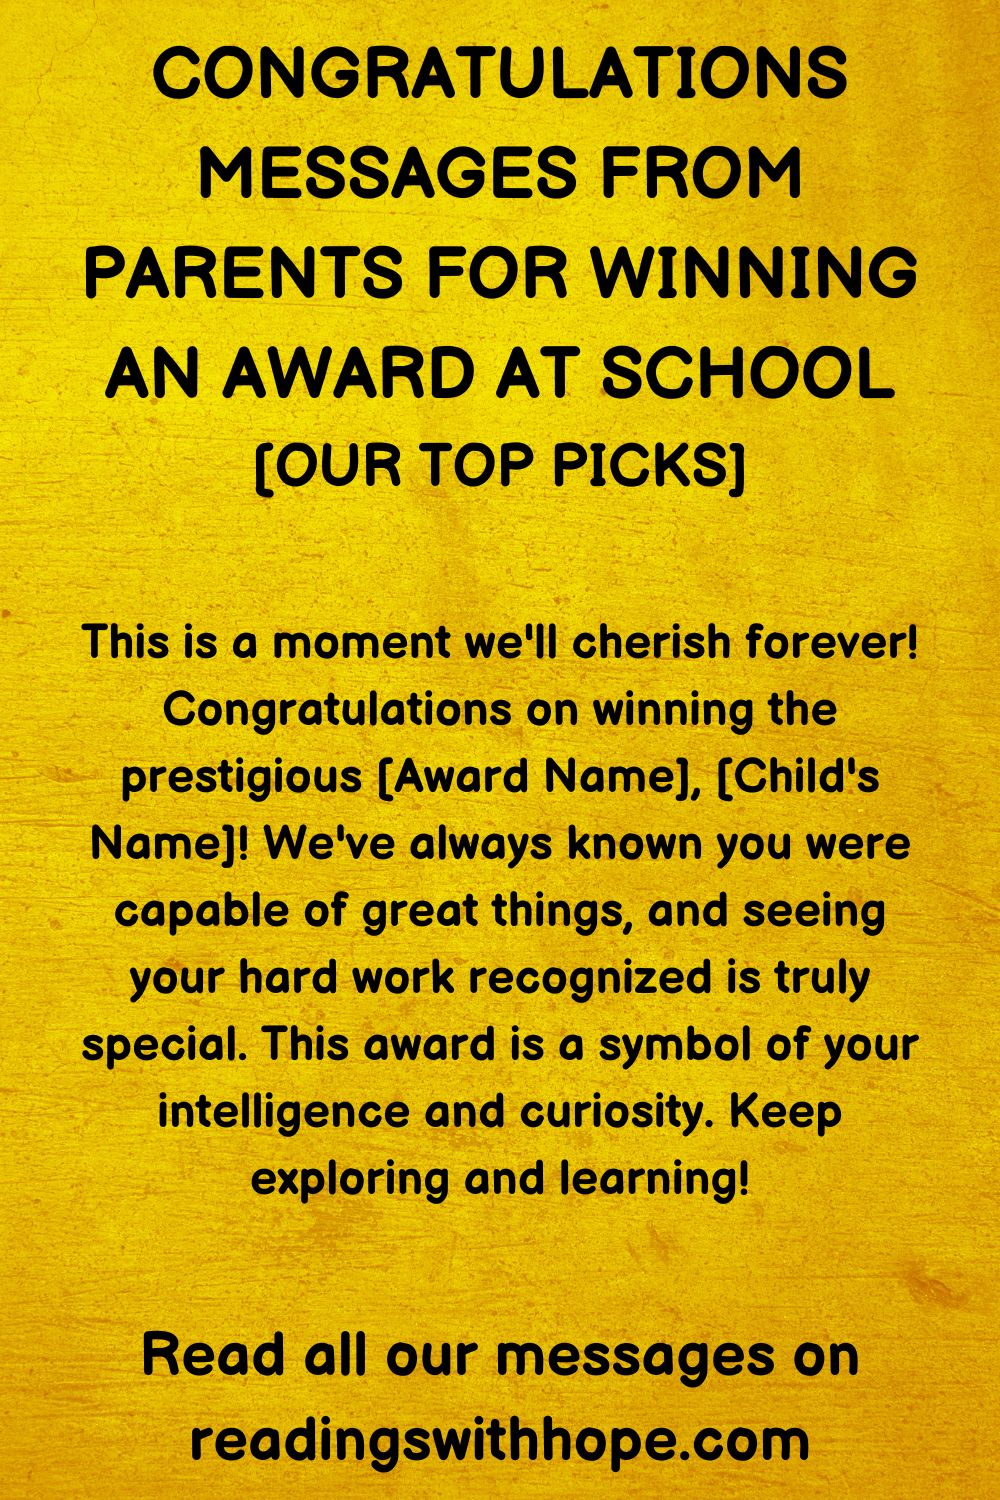 congratulations message for winning an award at school from parents